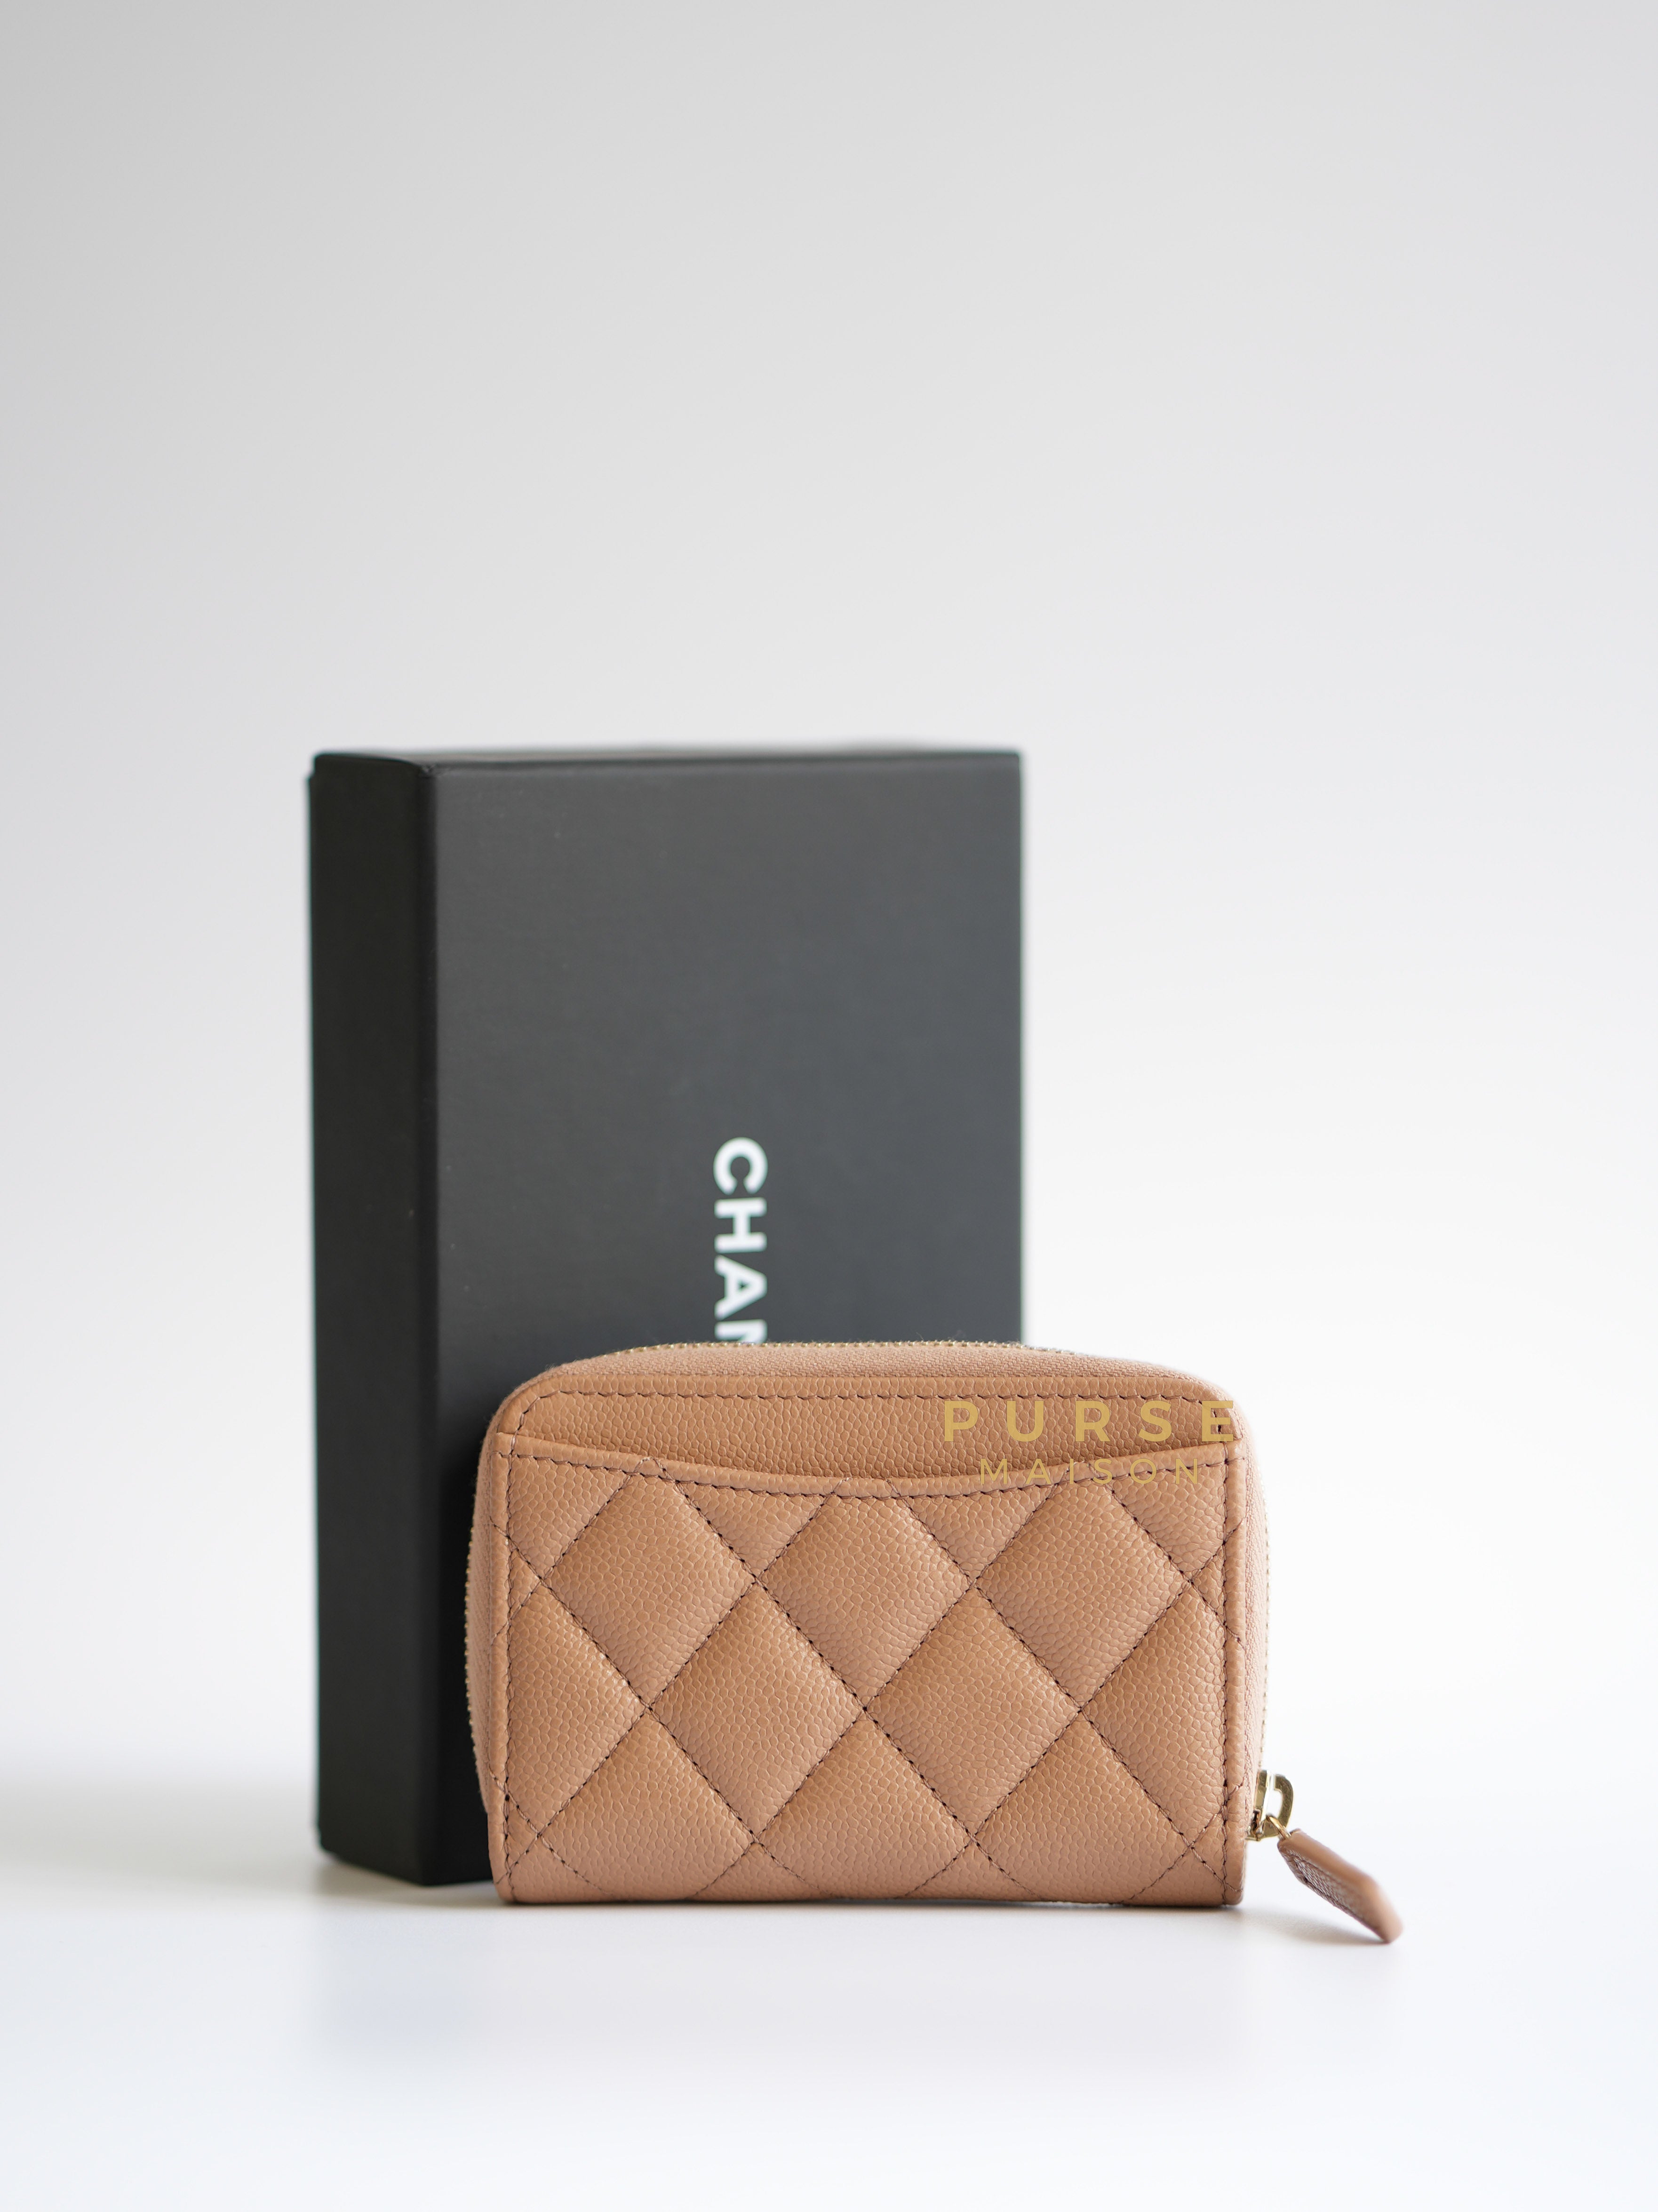 Zip Card Holder Wallet in Dark Beige Caviar and Light Gold Hardware (Microchip) | Purse Maison Luxury Bags Shop